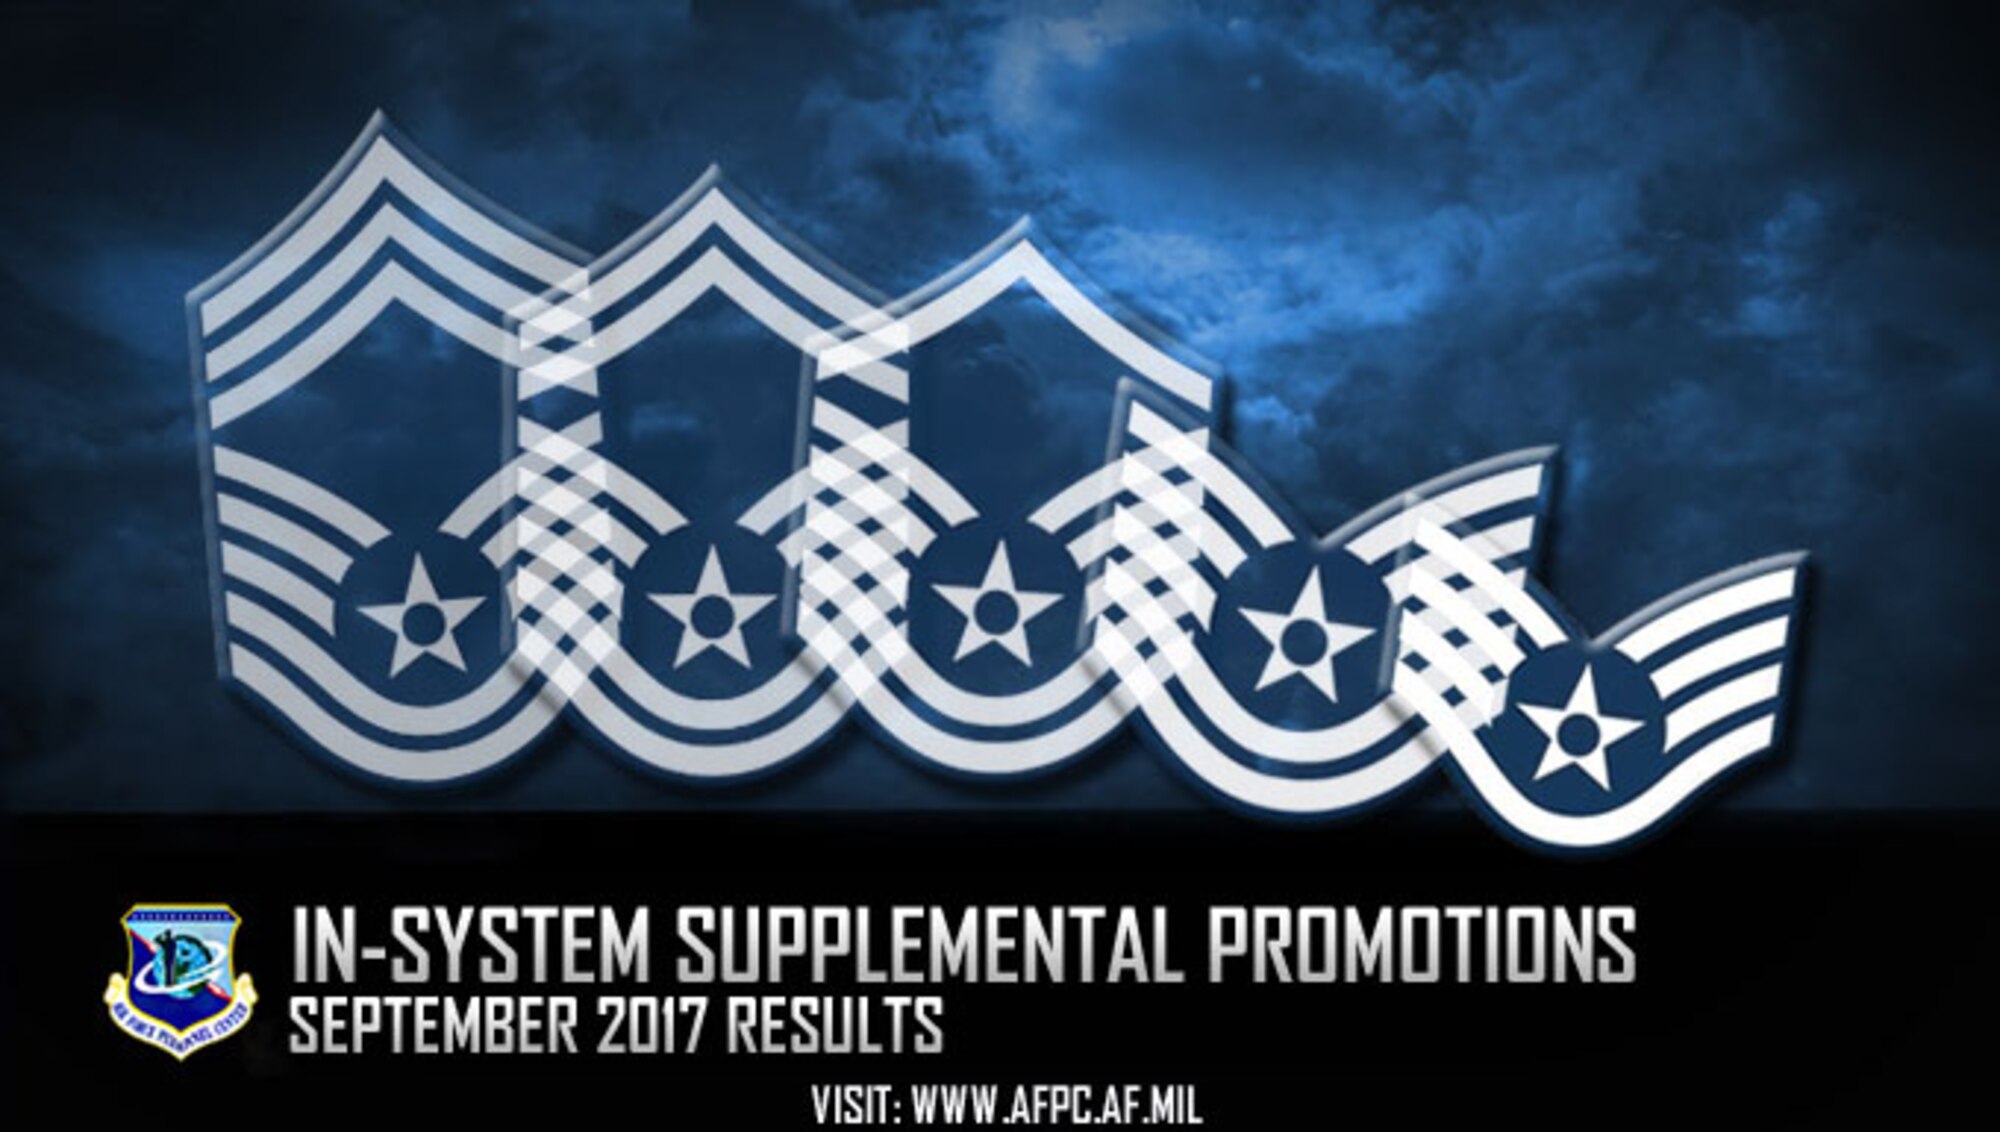 In-system supplemental promotions for September 2017